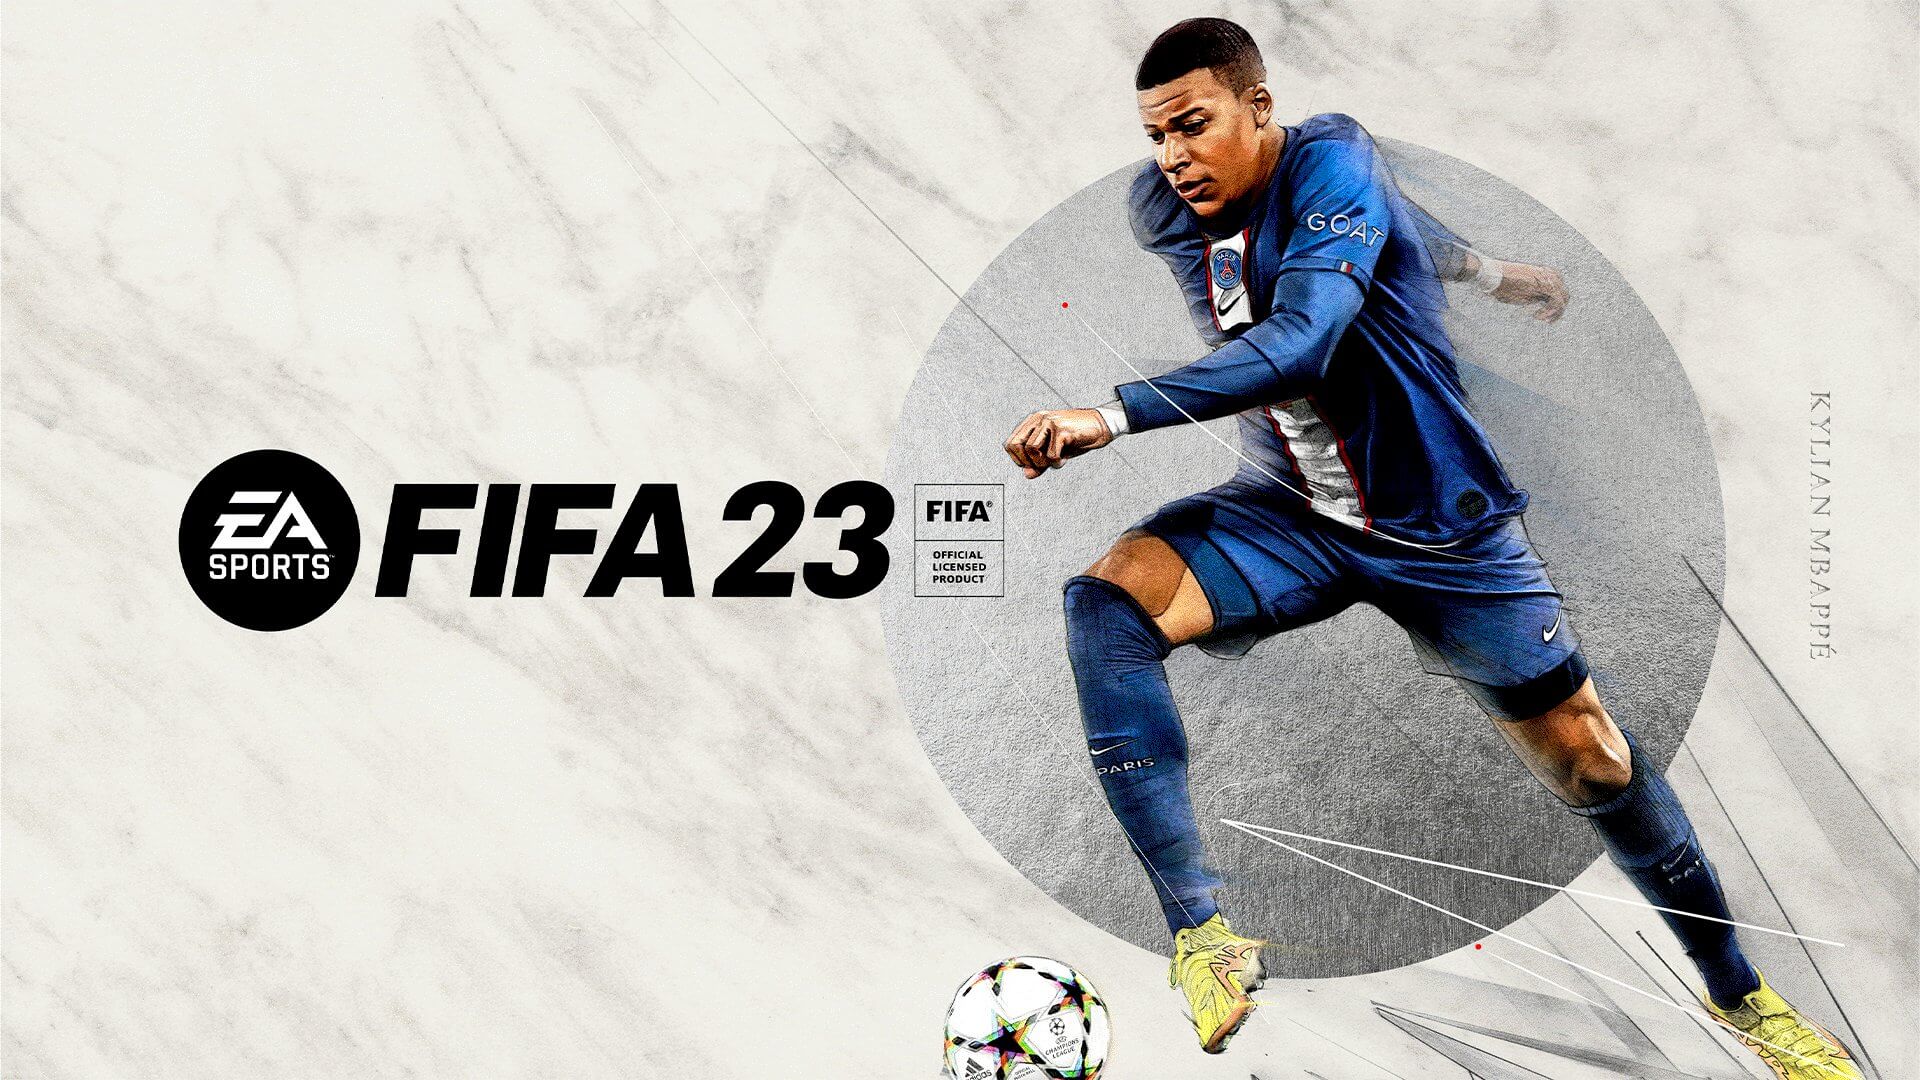 Video: FIFA 23 gameplay